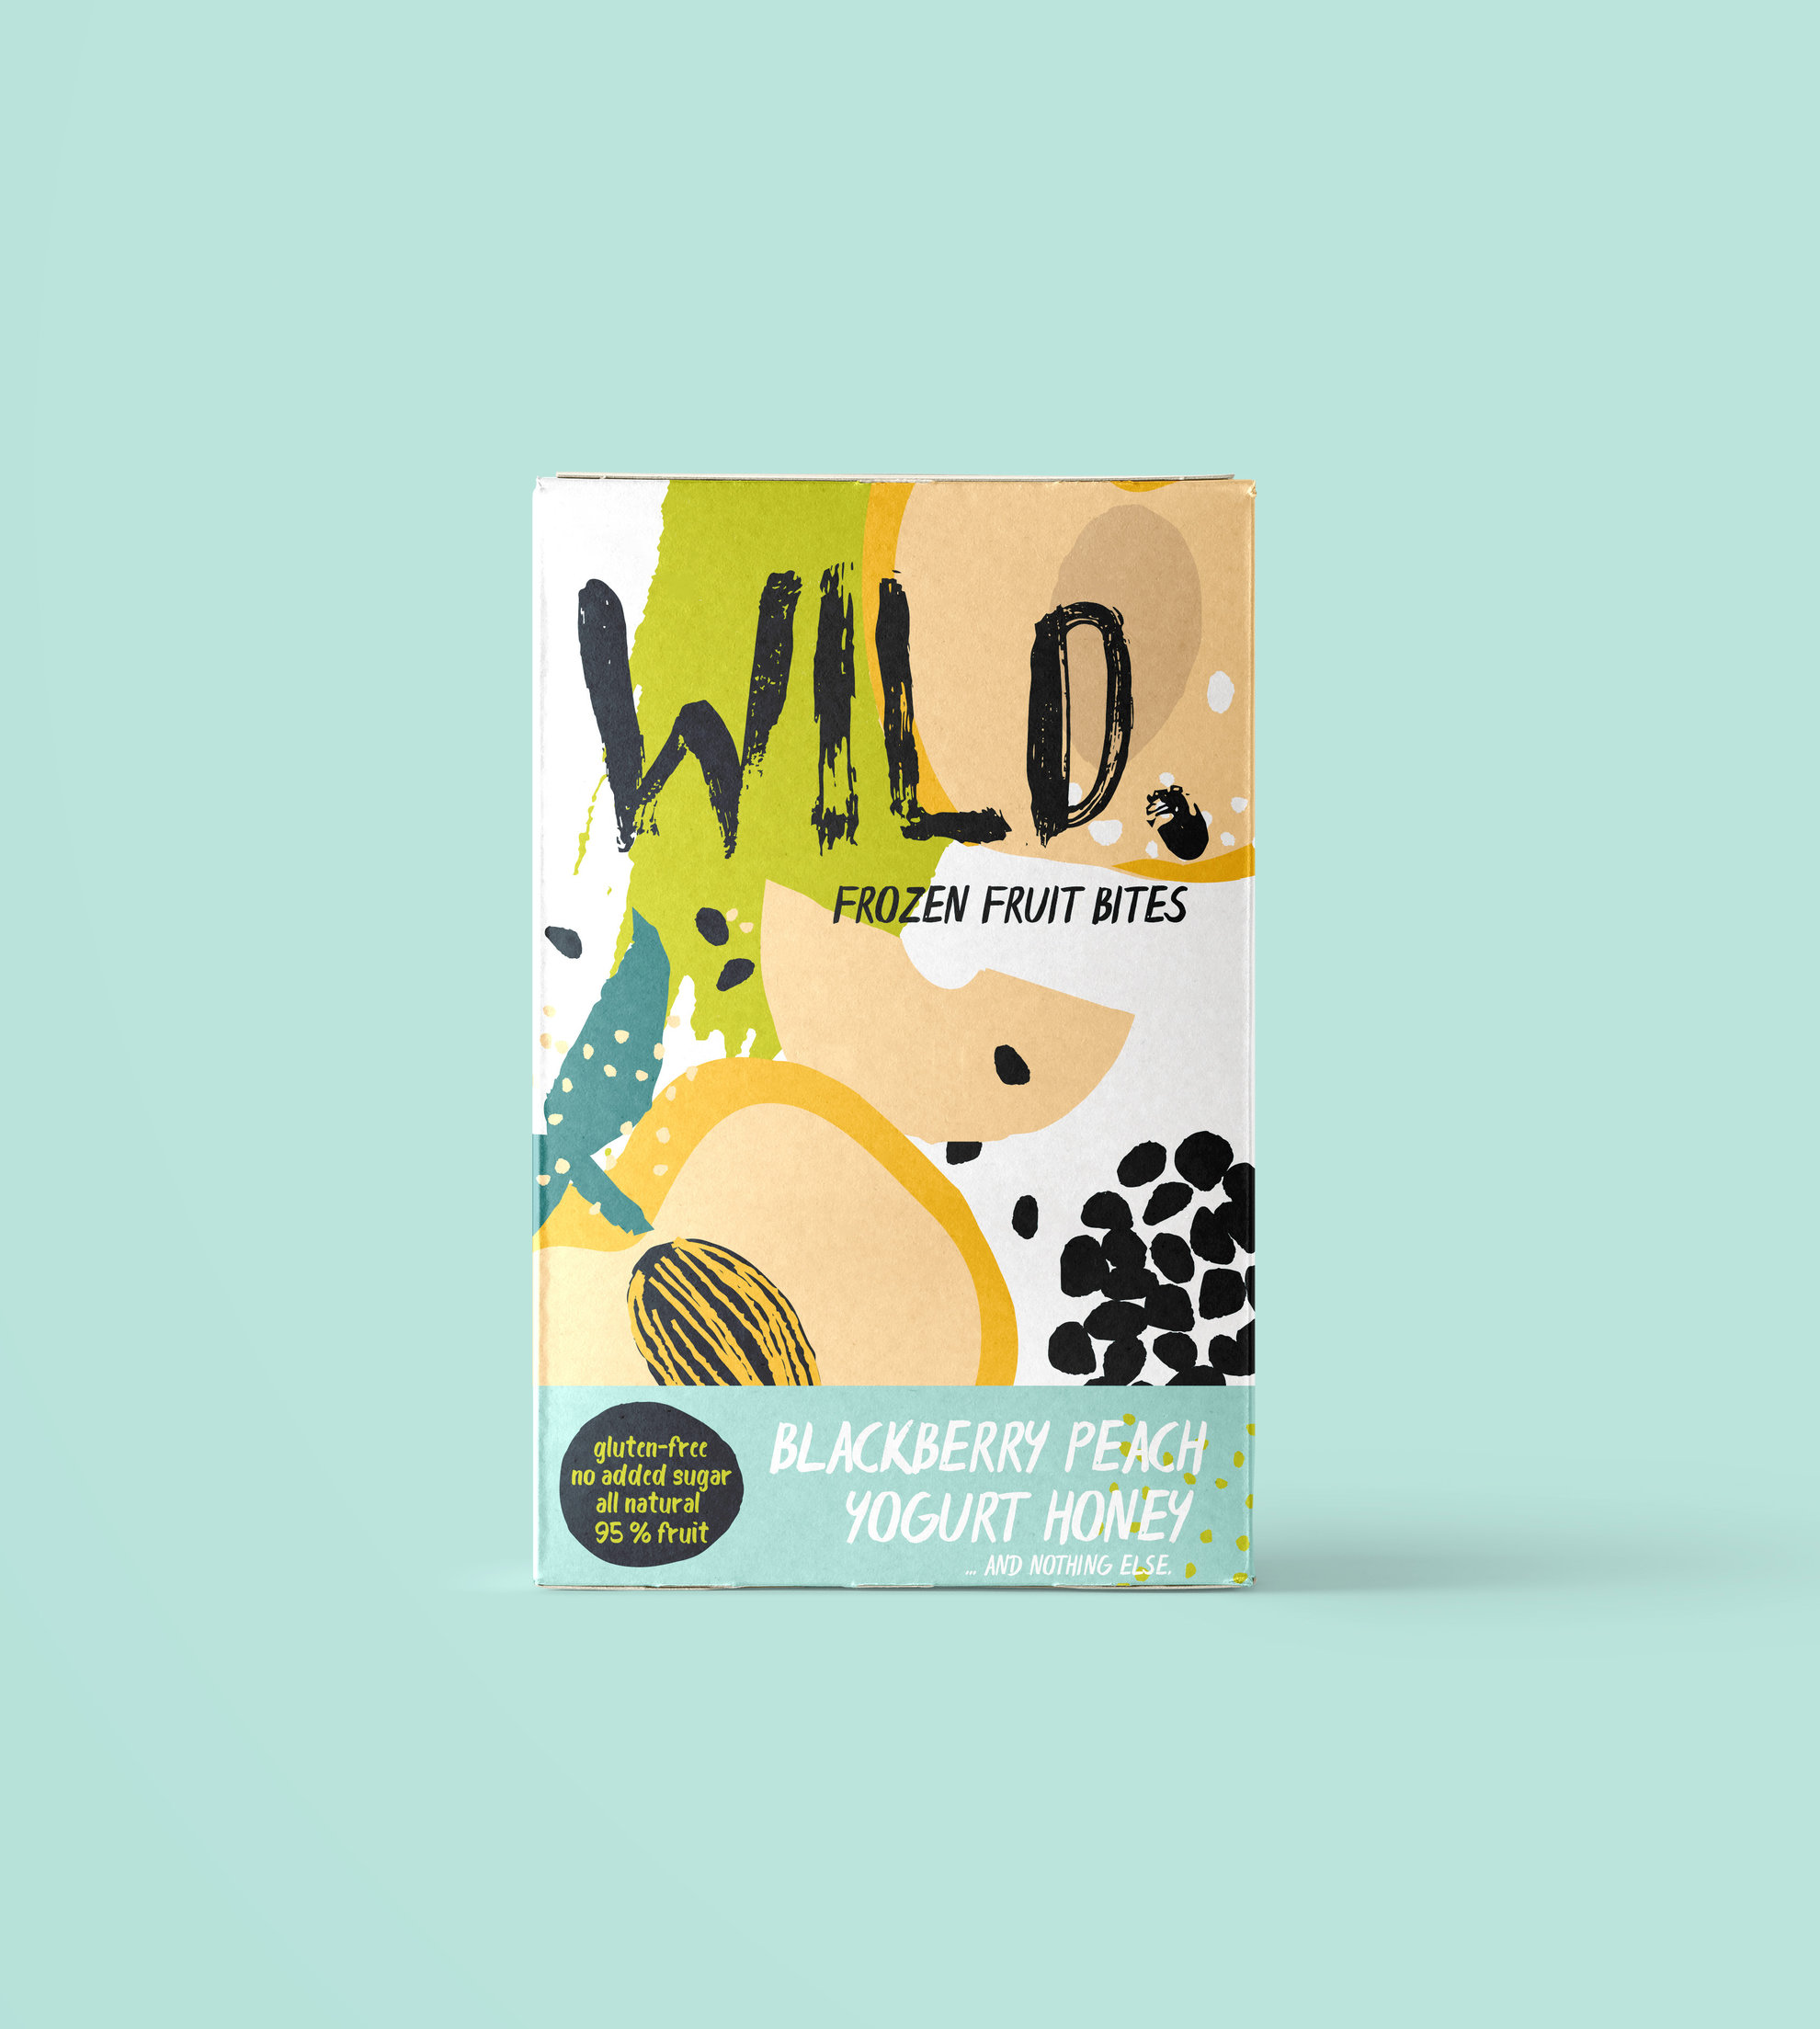 Wild - Branding project